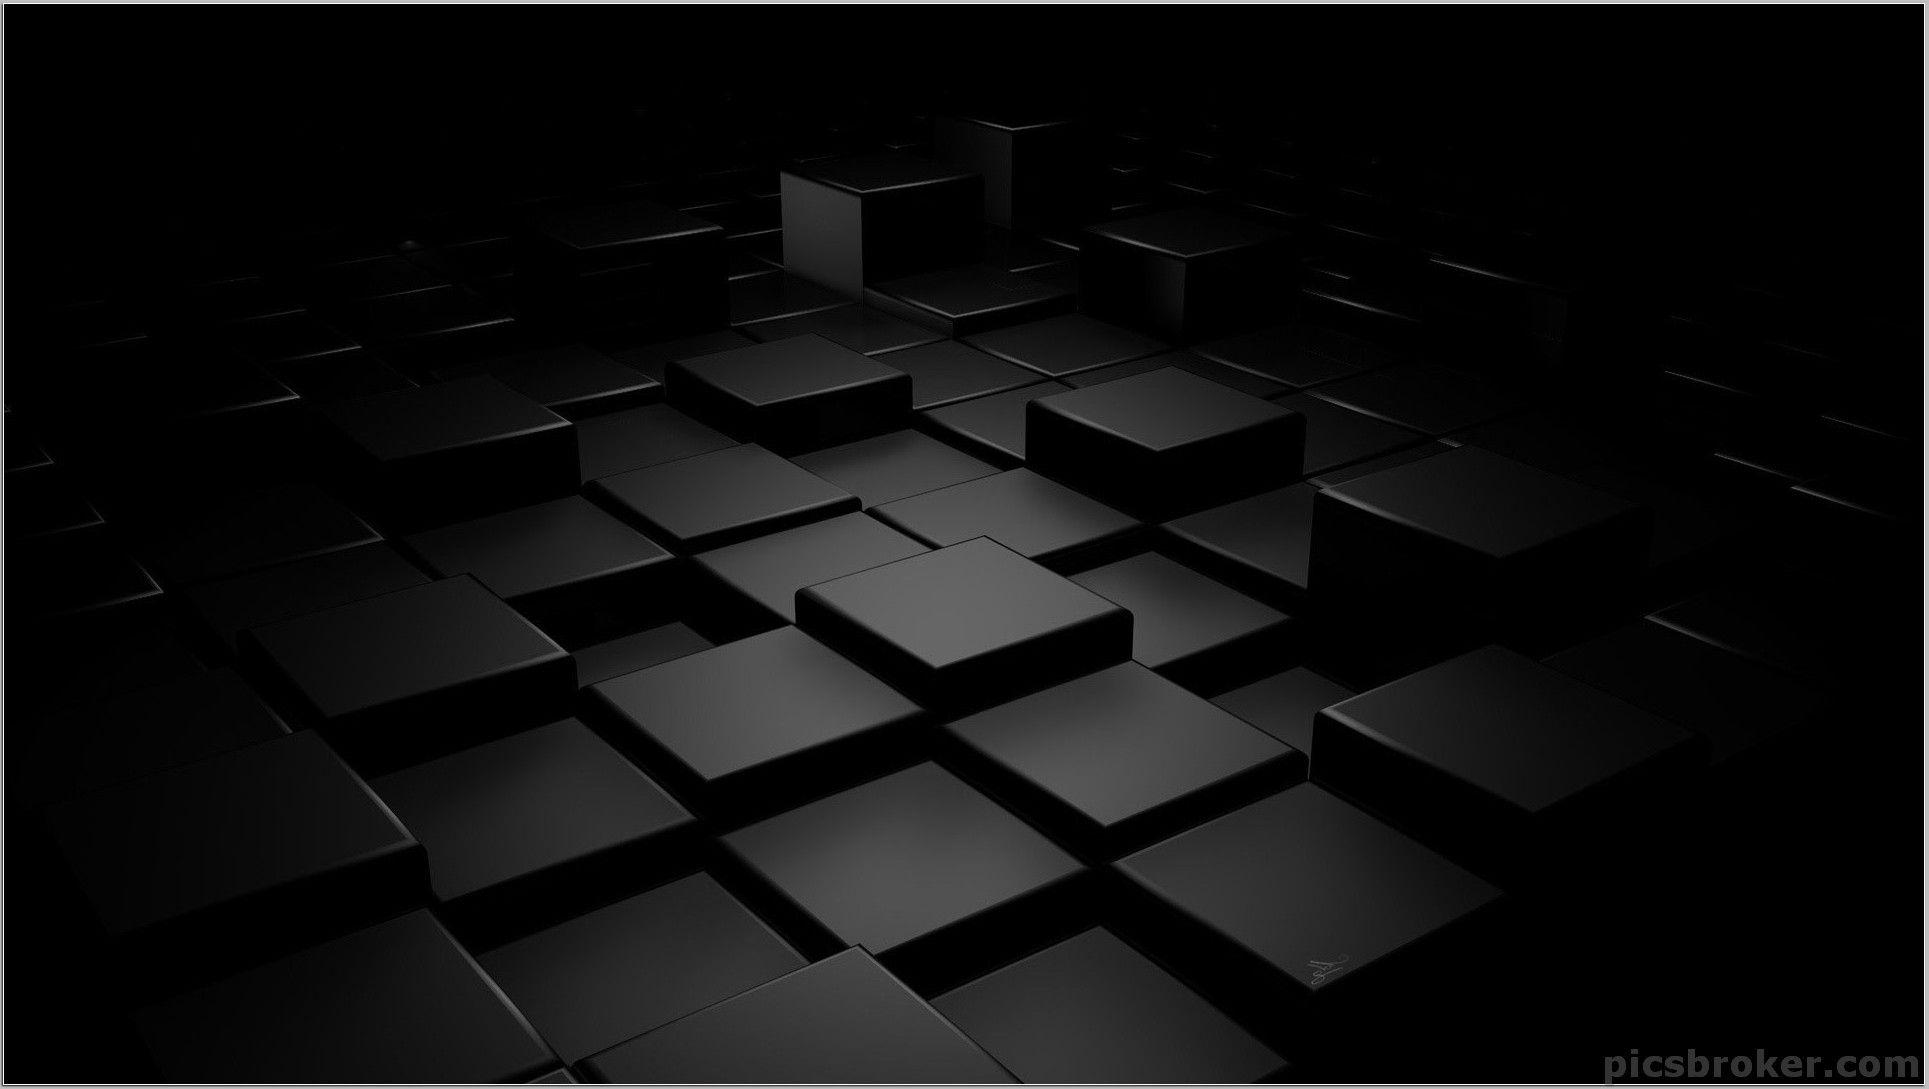 Black Abstract Wallpaper HD. (53++ Wallpaper)